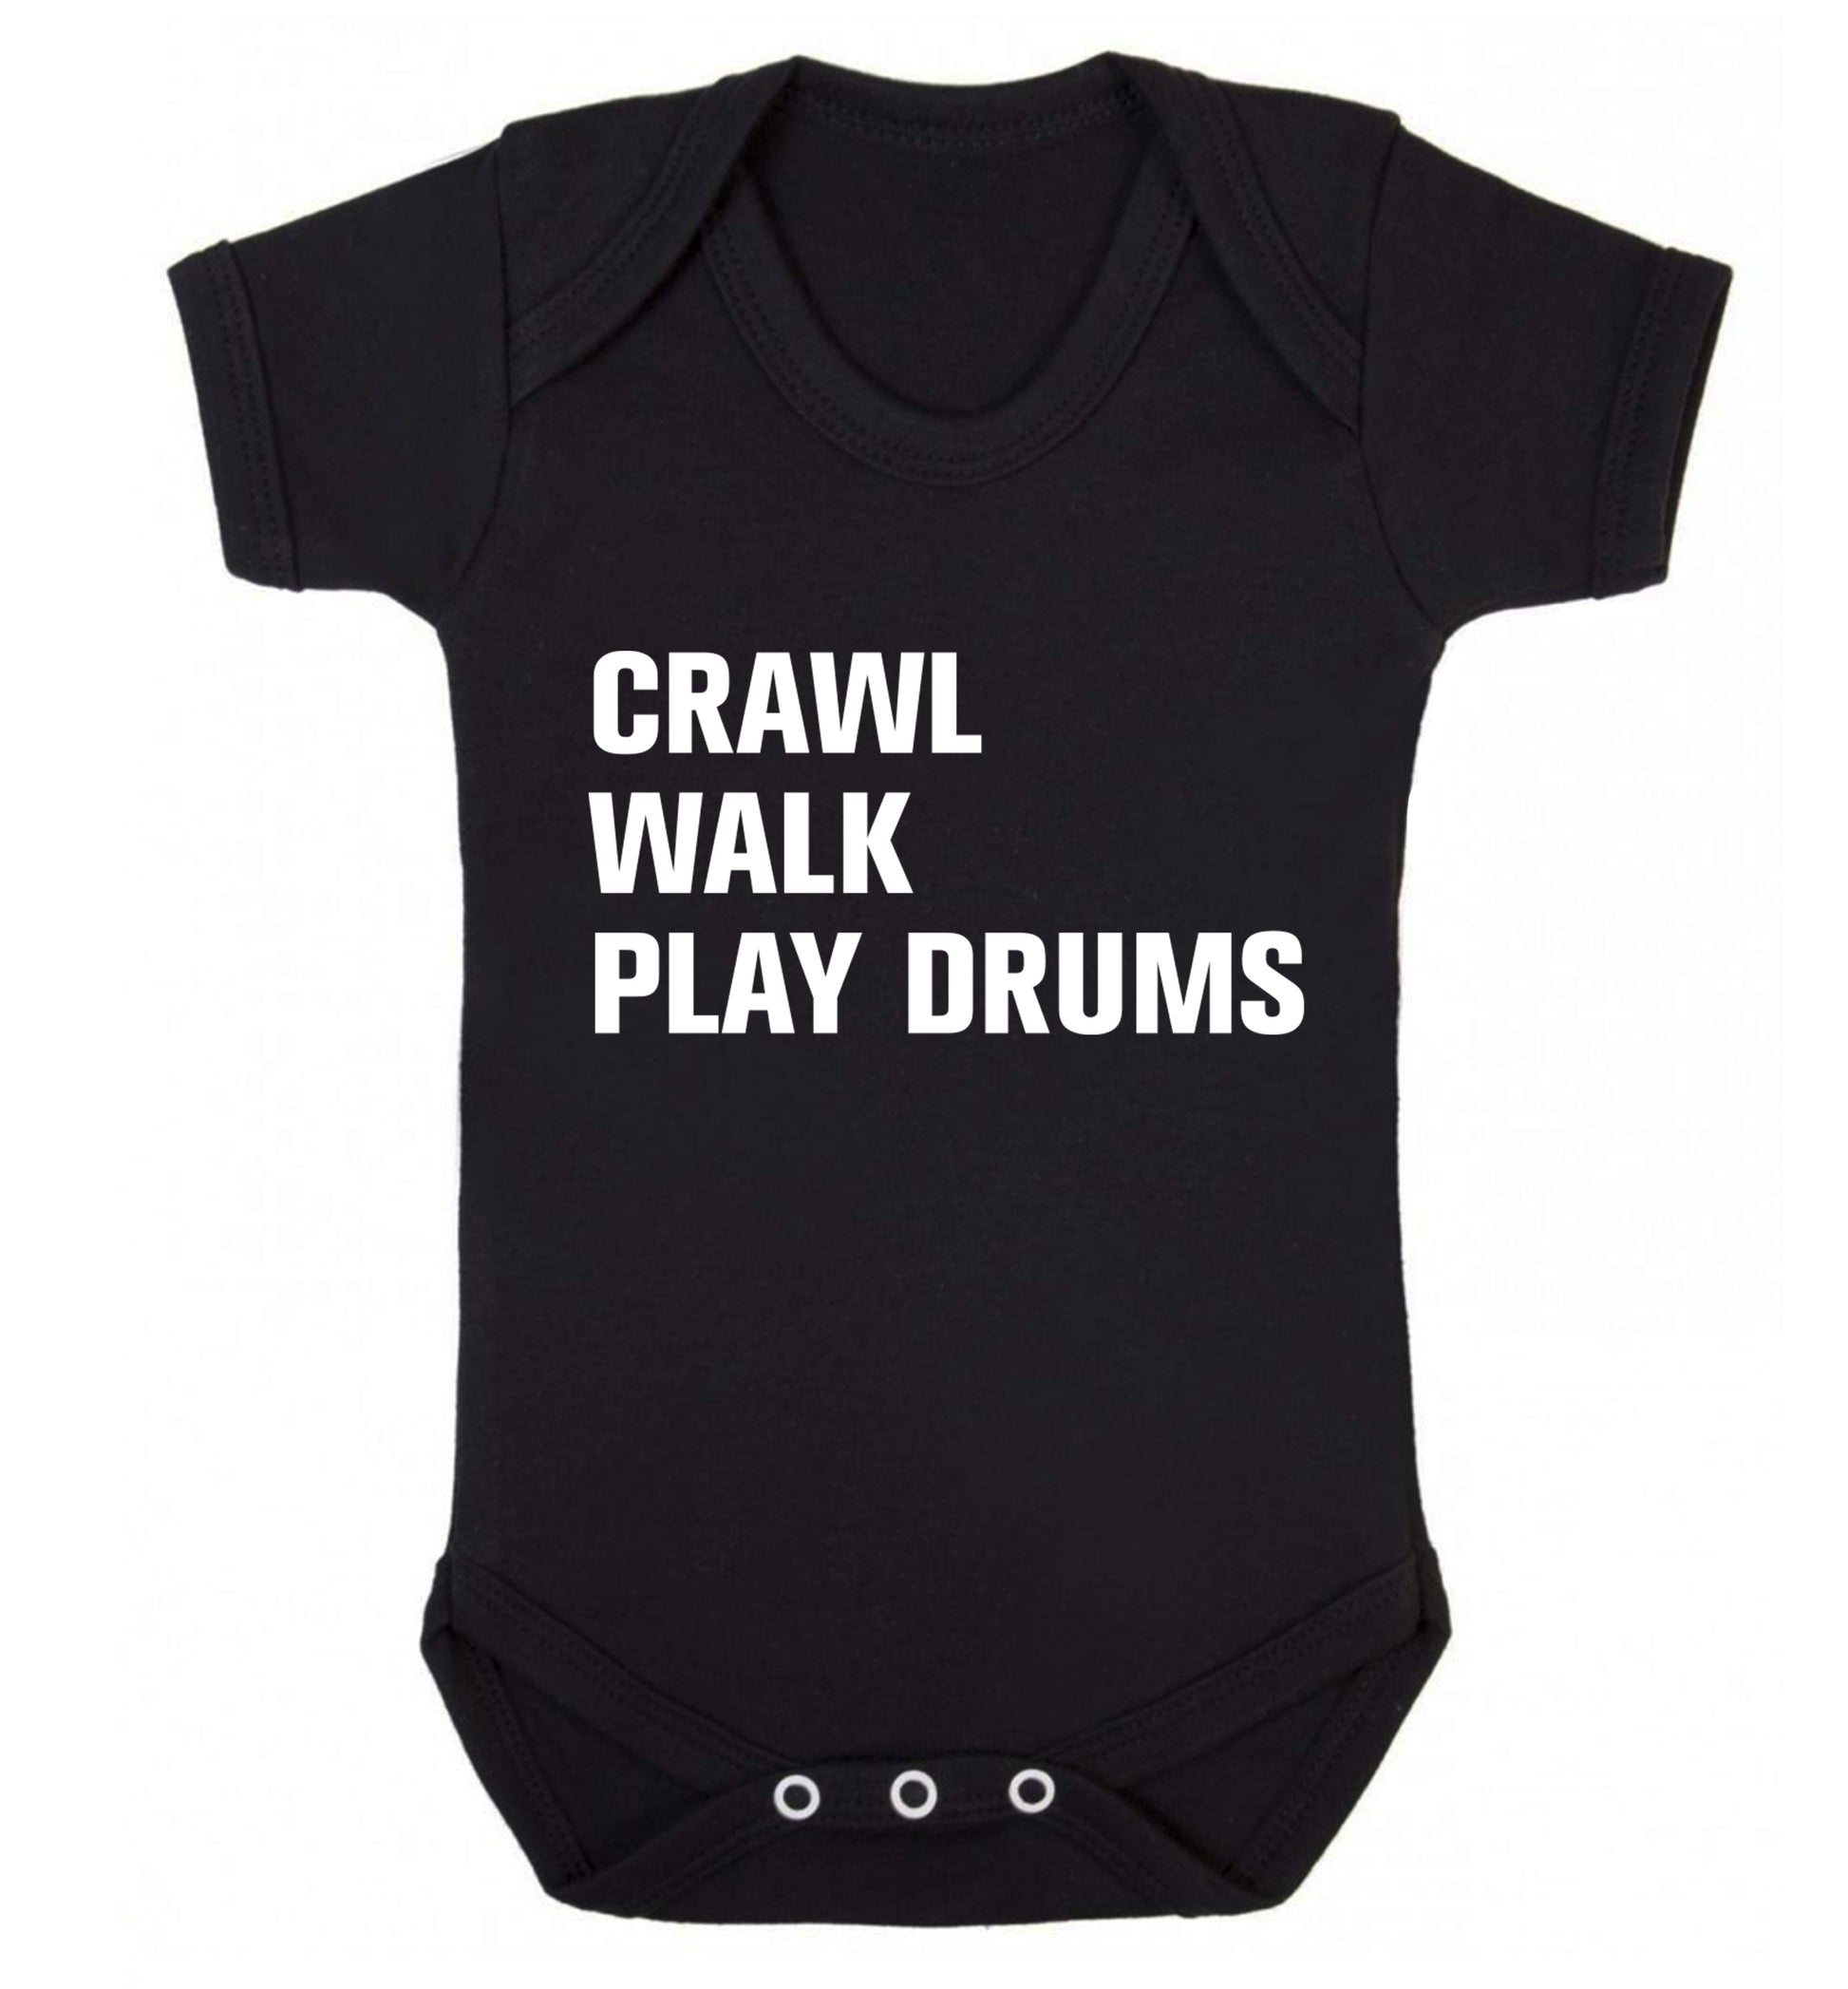 Crawl walk play drums Baby Vest black 18-24 months